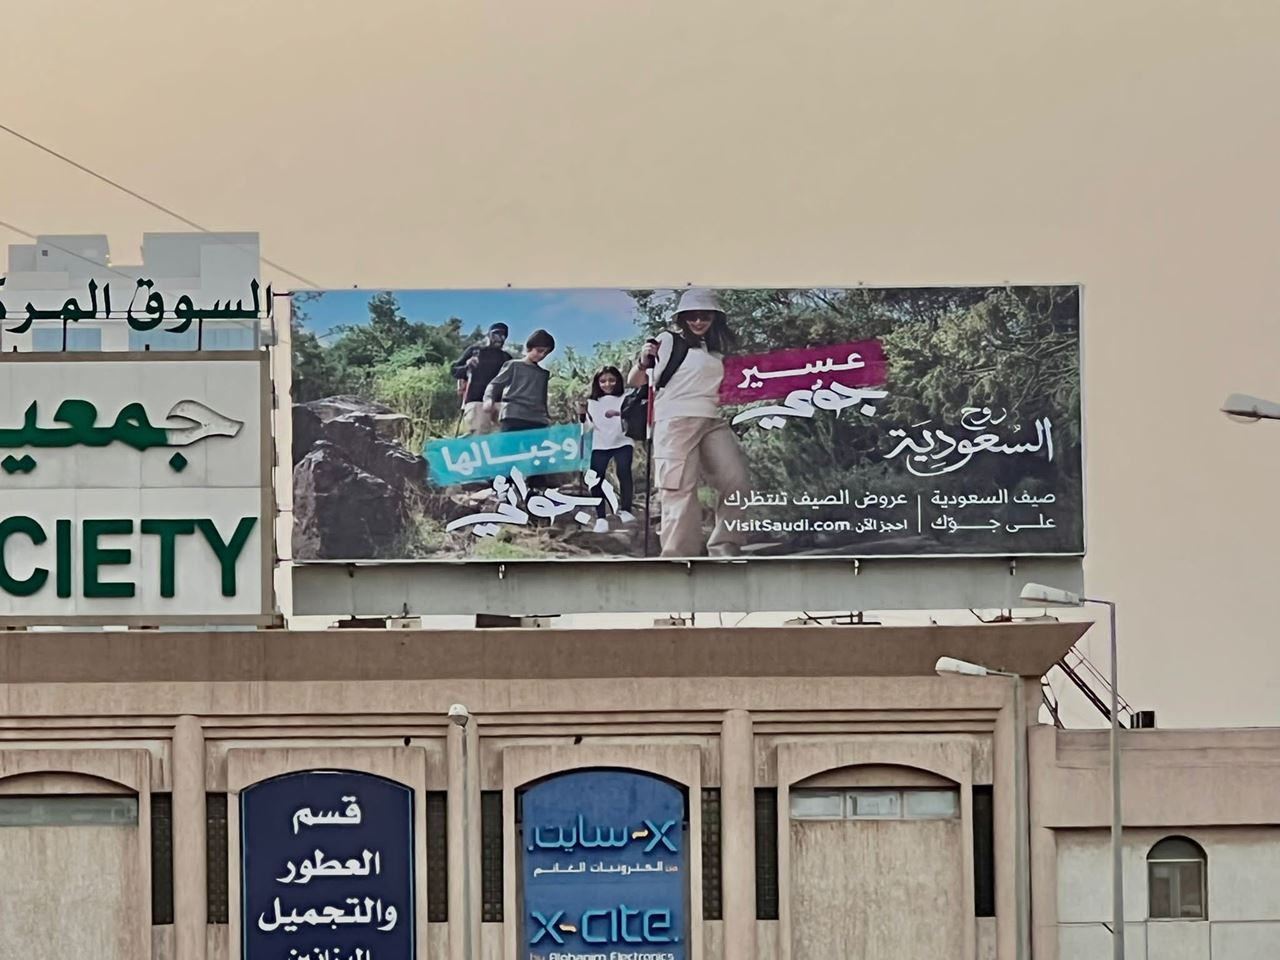 Jabriya Billboard - Ad Zone